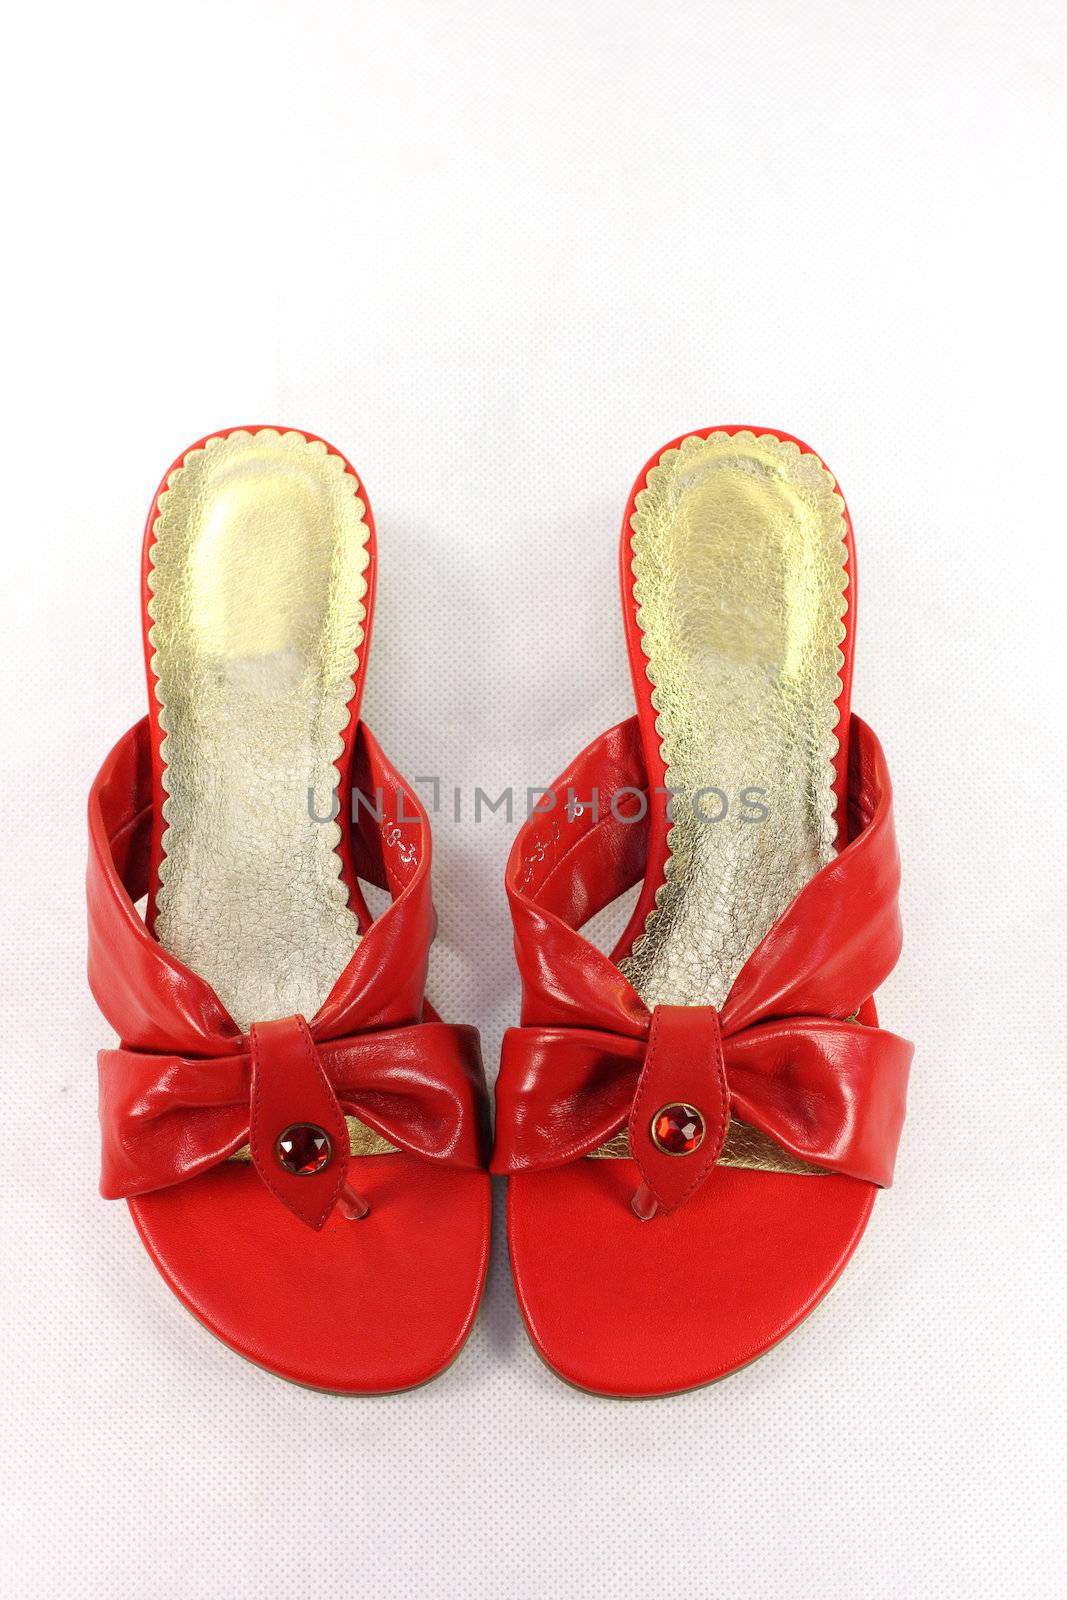 footwear, pair, female, shoes, fashion, fashionable, red, stone, elegant, ornament 